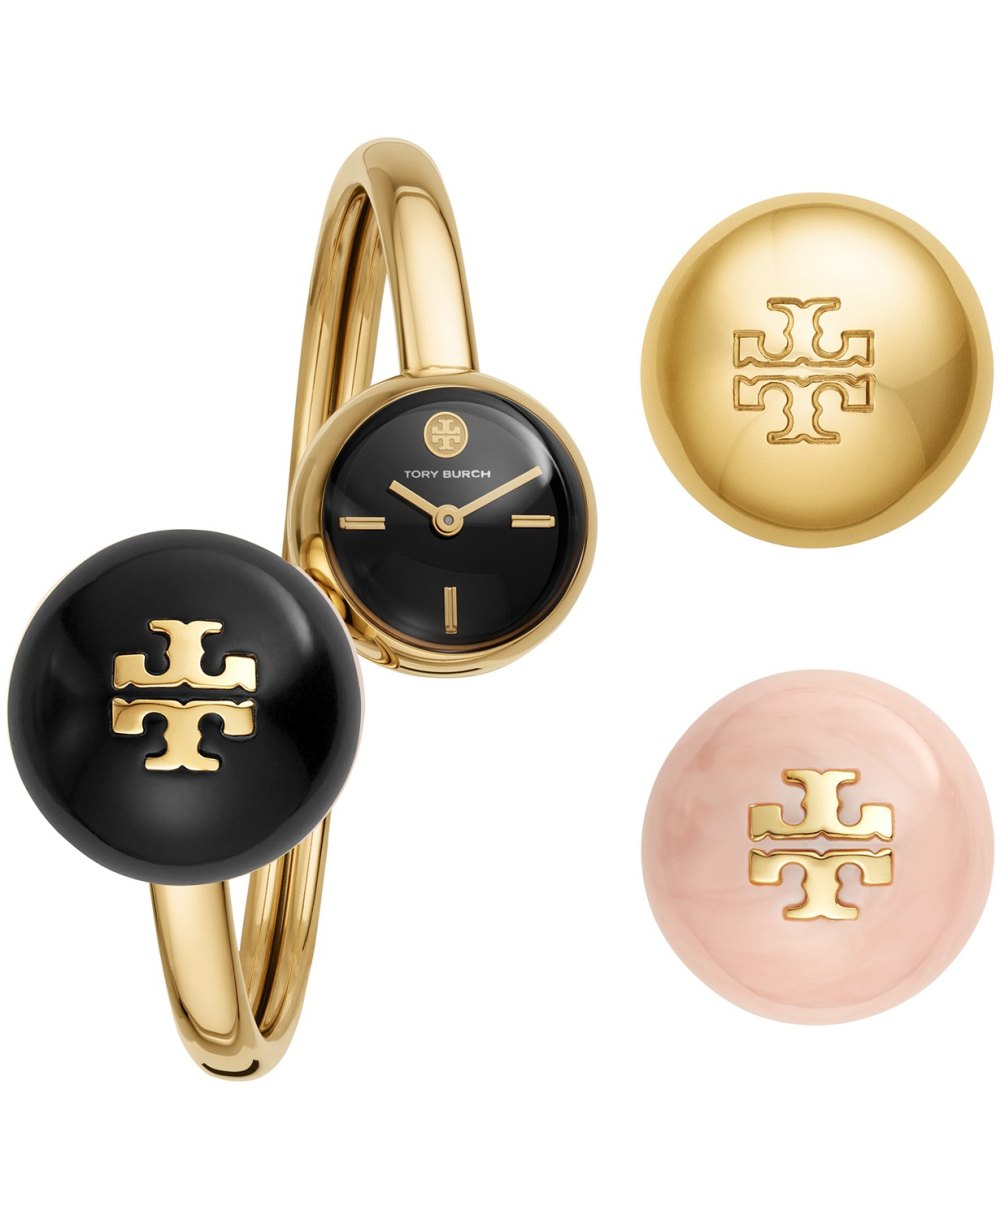 Tory Burch Women's Blair Bangle Gold-Tone Stainless Steel Bracelet Watch 22mm